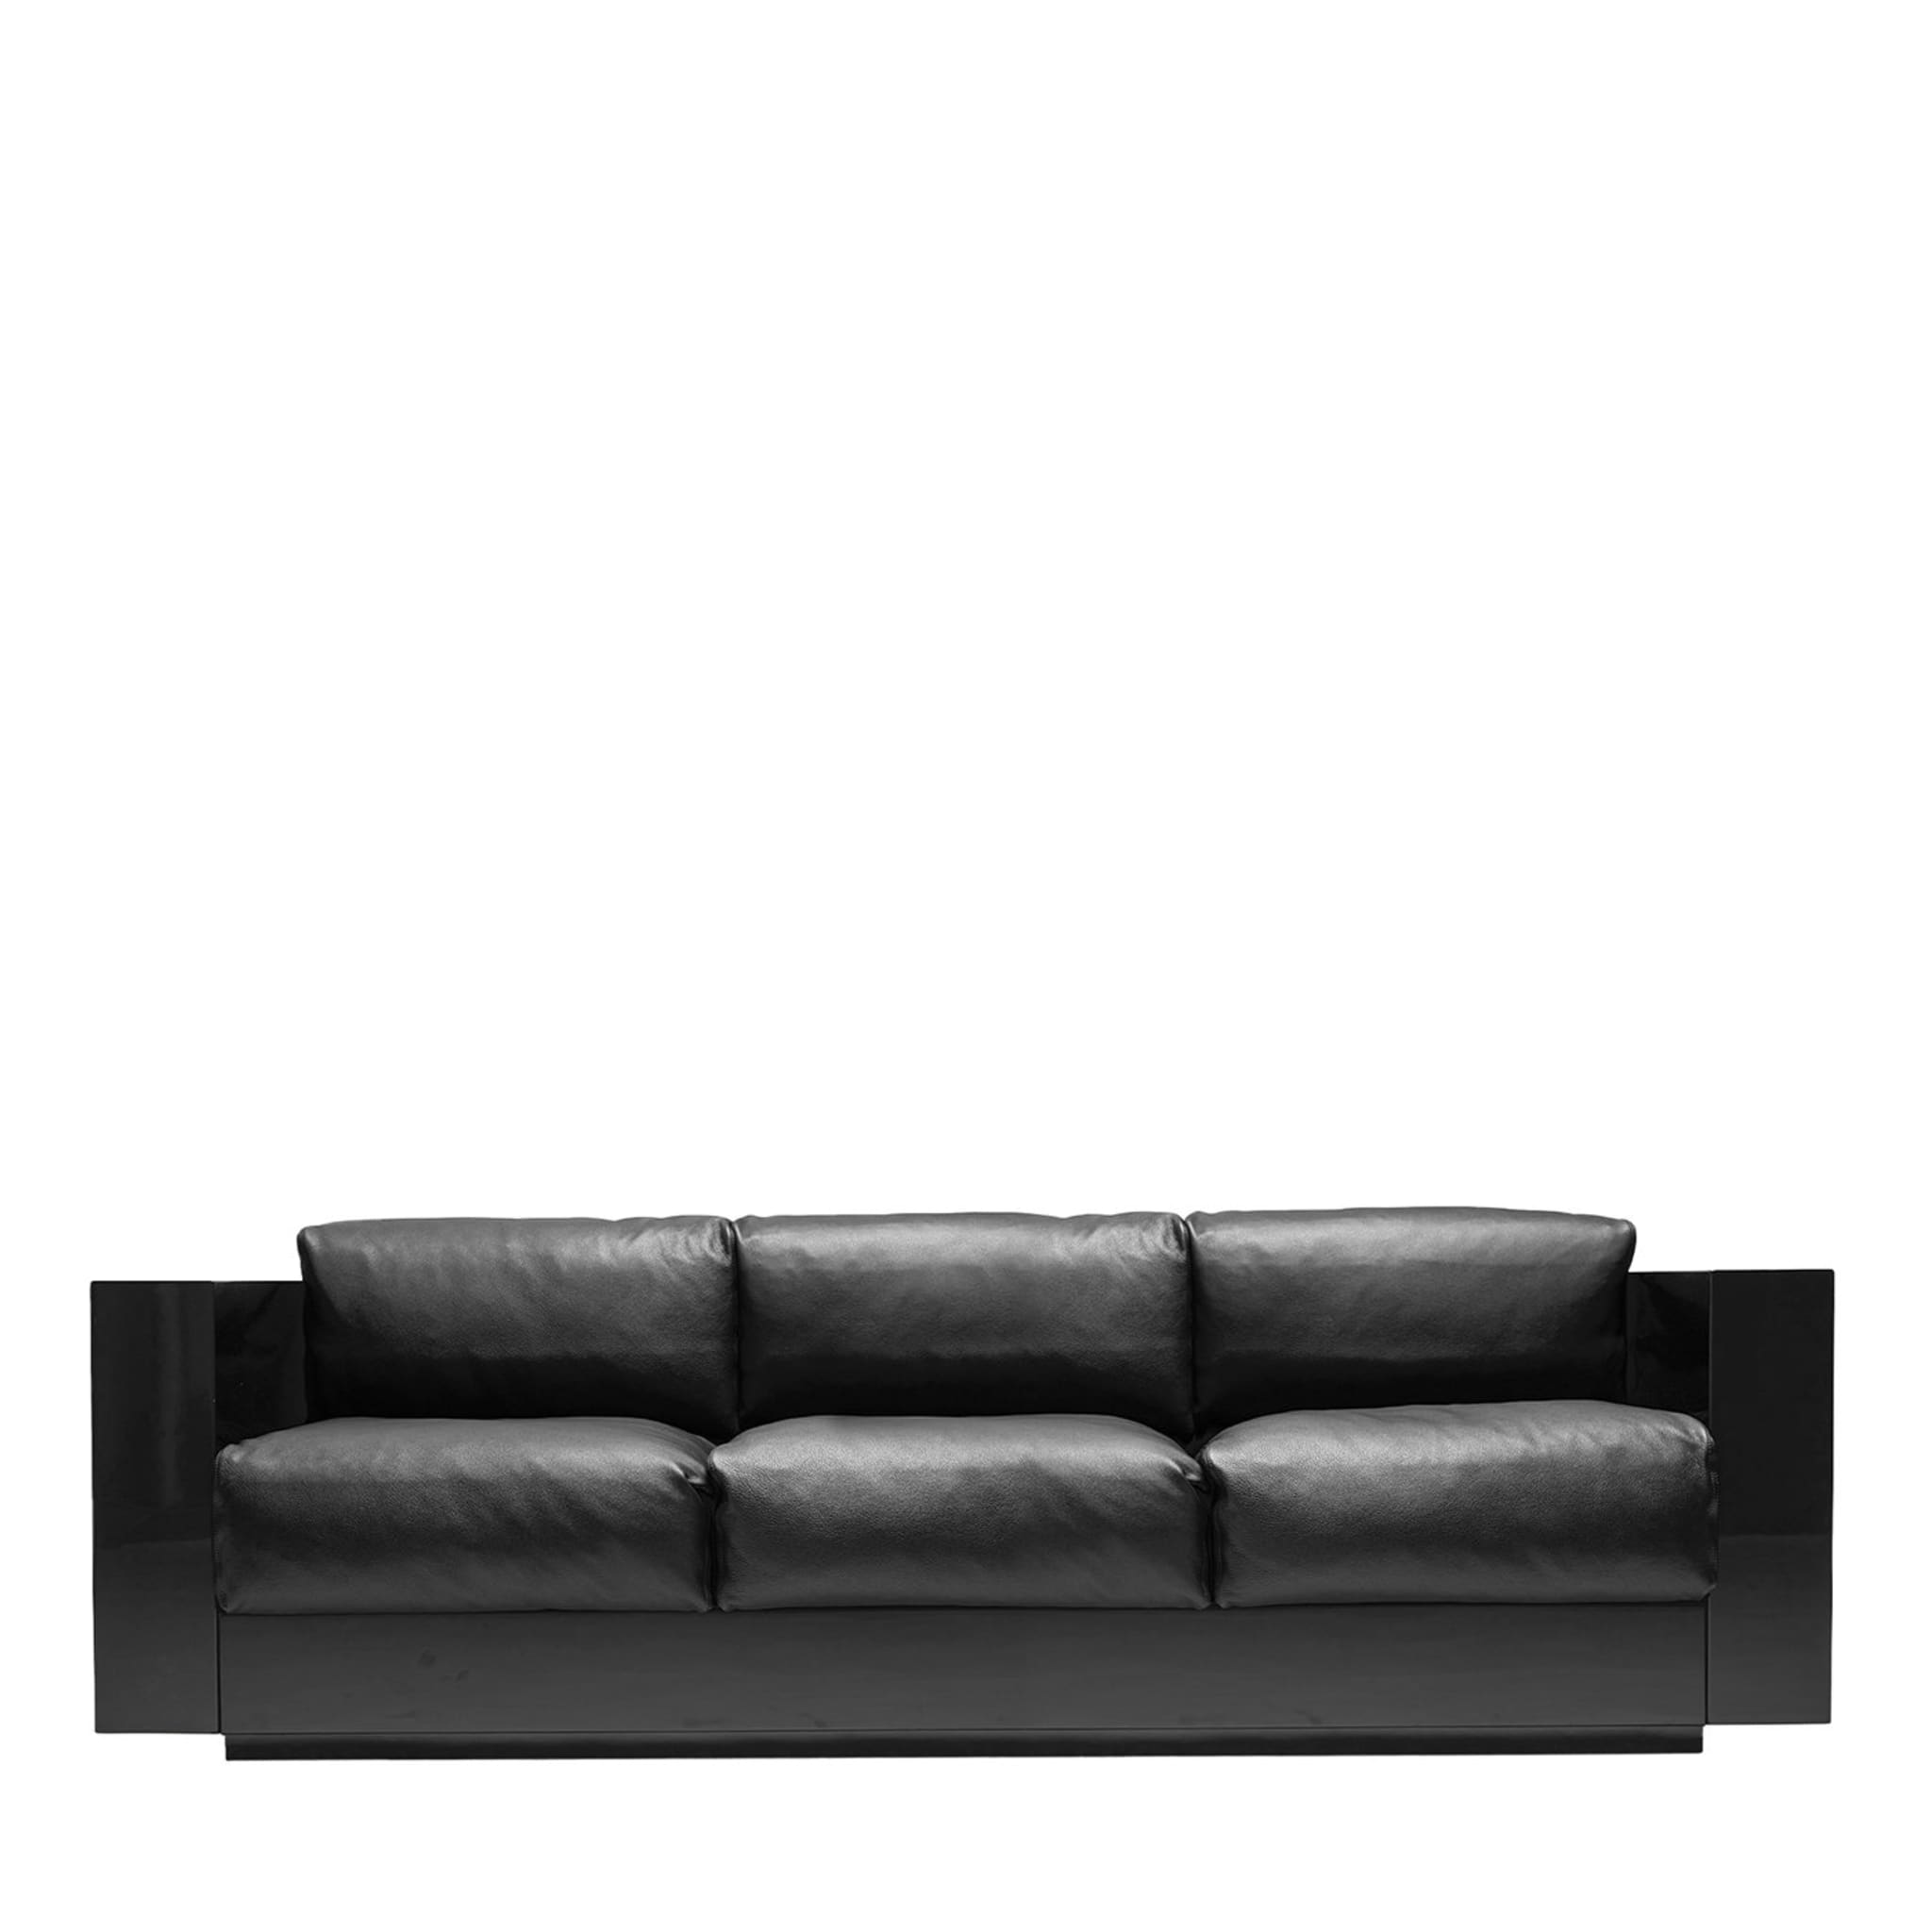 Saratoga Black 3-Seat Sofa by Lella and Massimo Vignelli - Main view